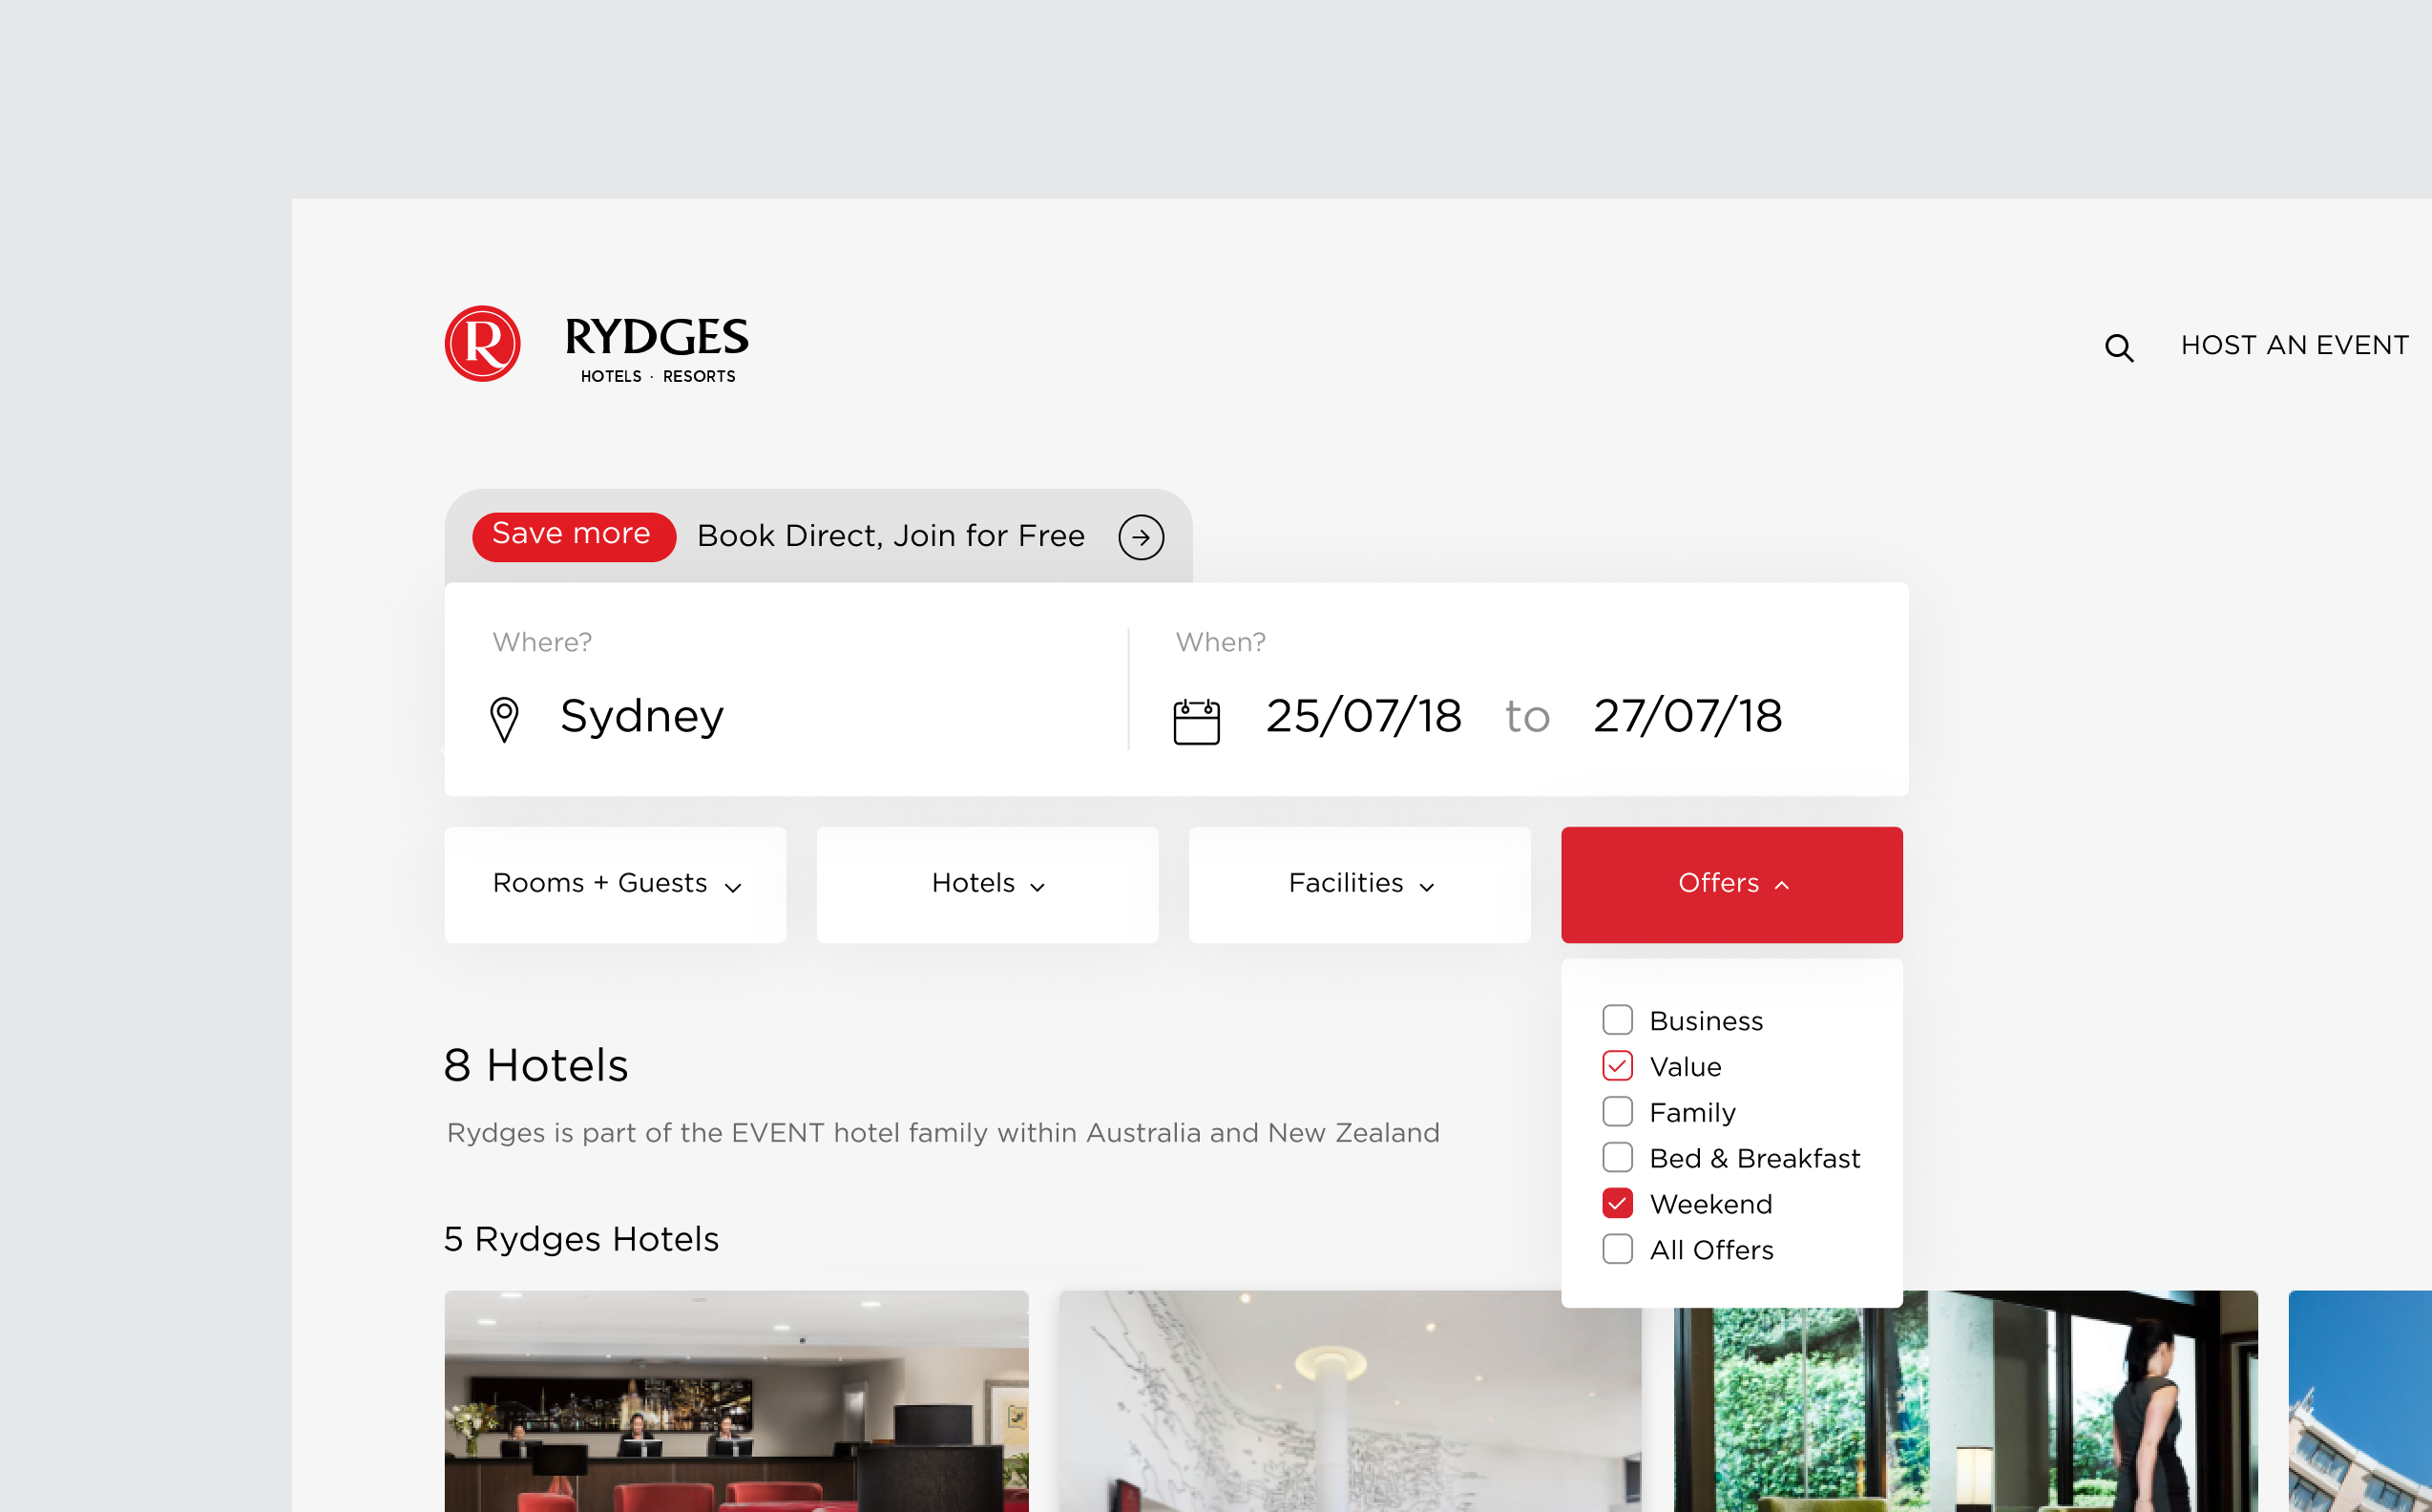 EVENT Rydges new website design, showcasing streamlined desktop hotel search